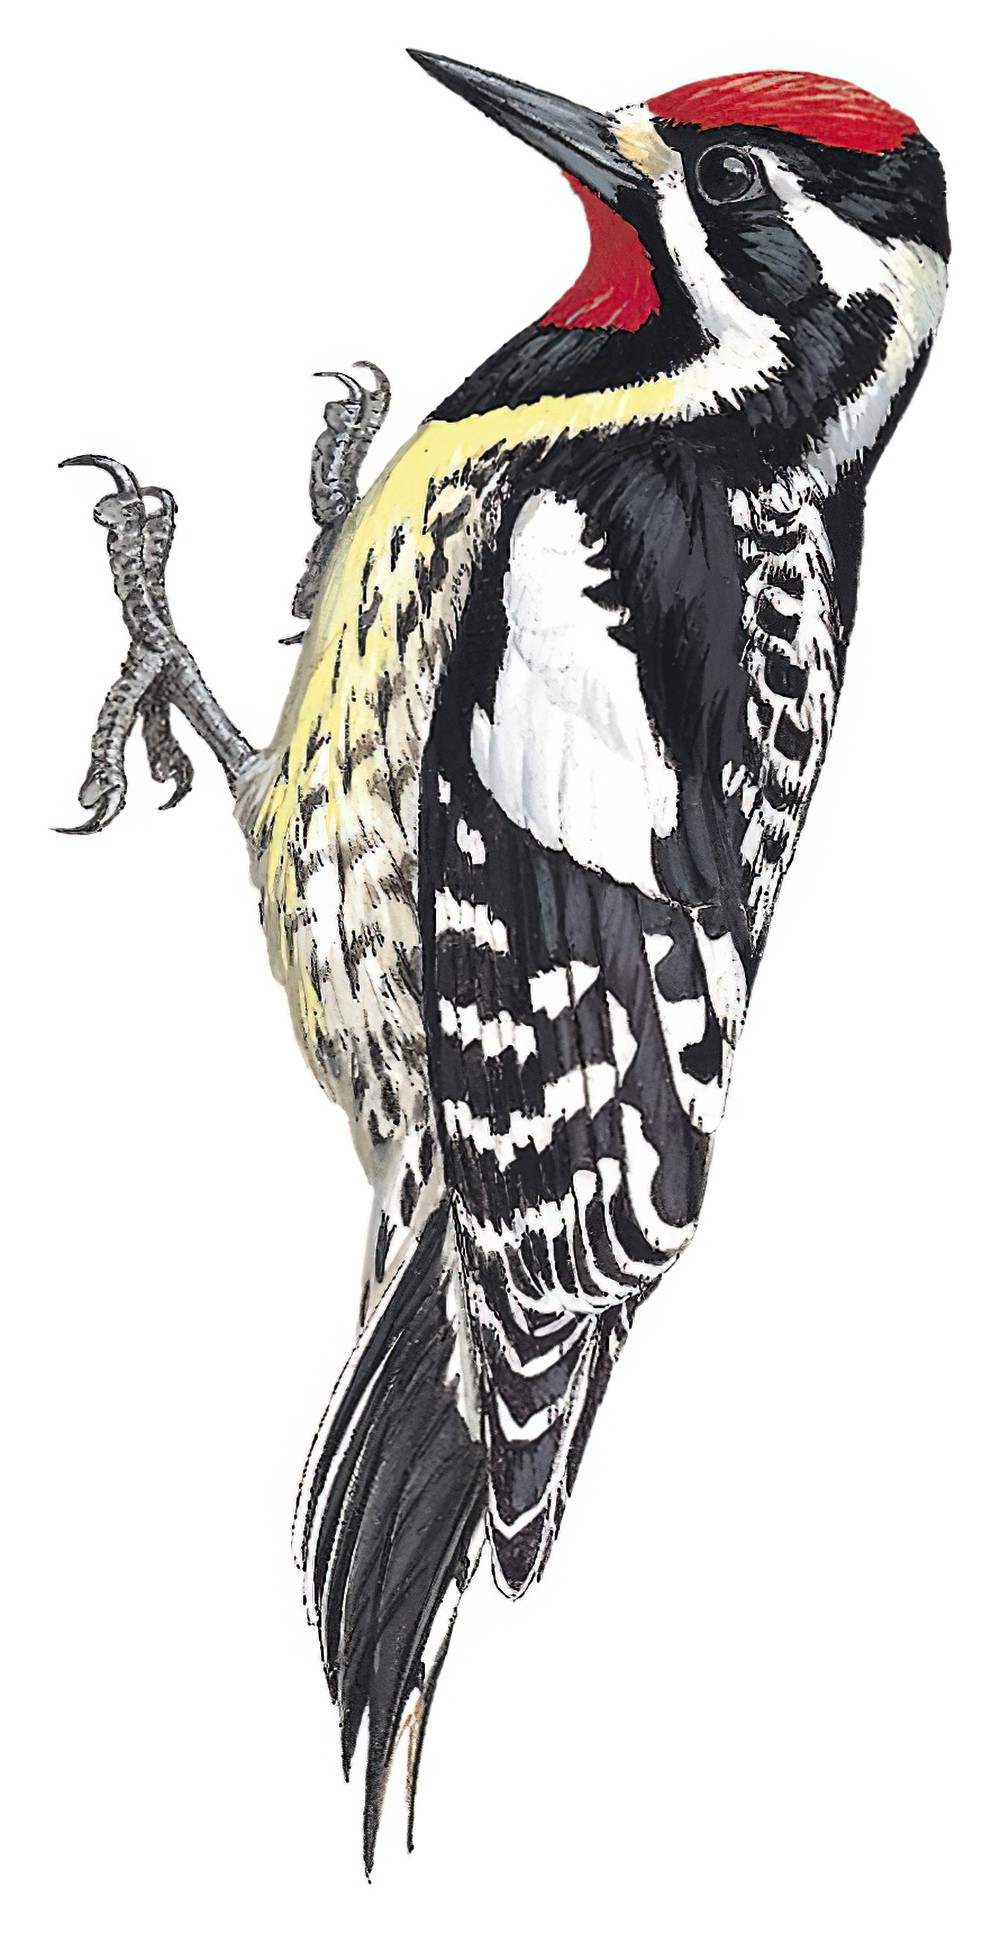 Yellow-bellied Sapsucker / Sphyrapicus varius